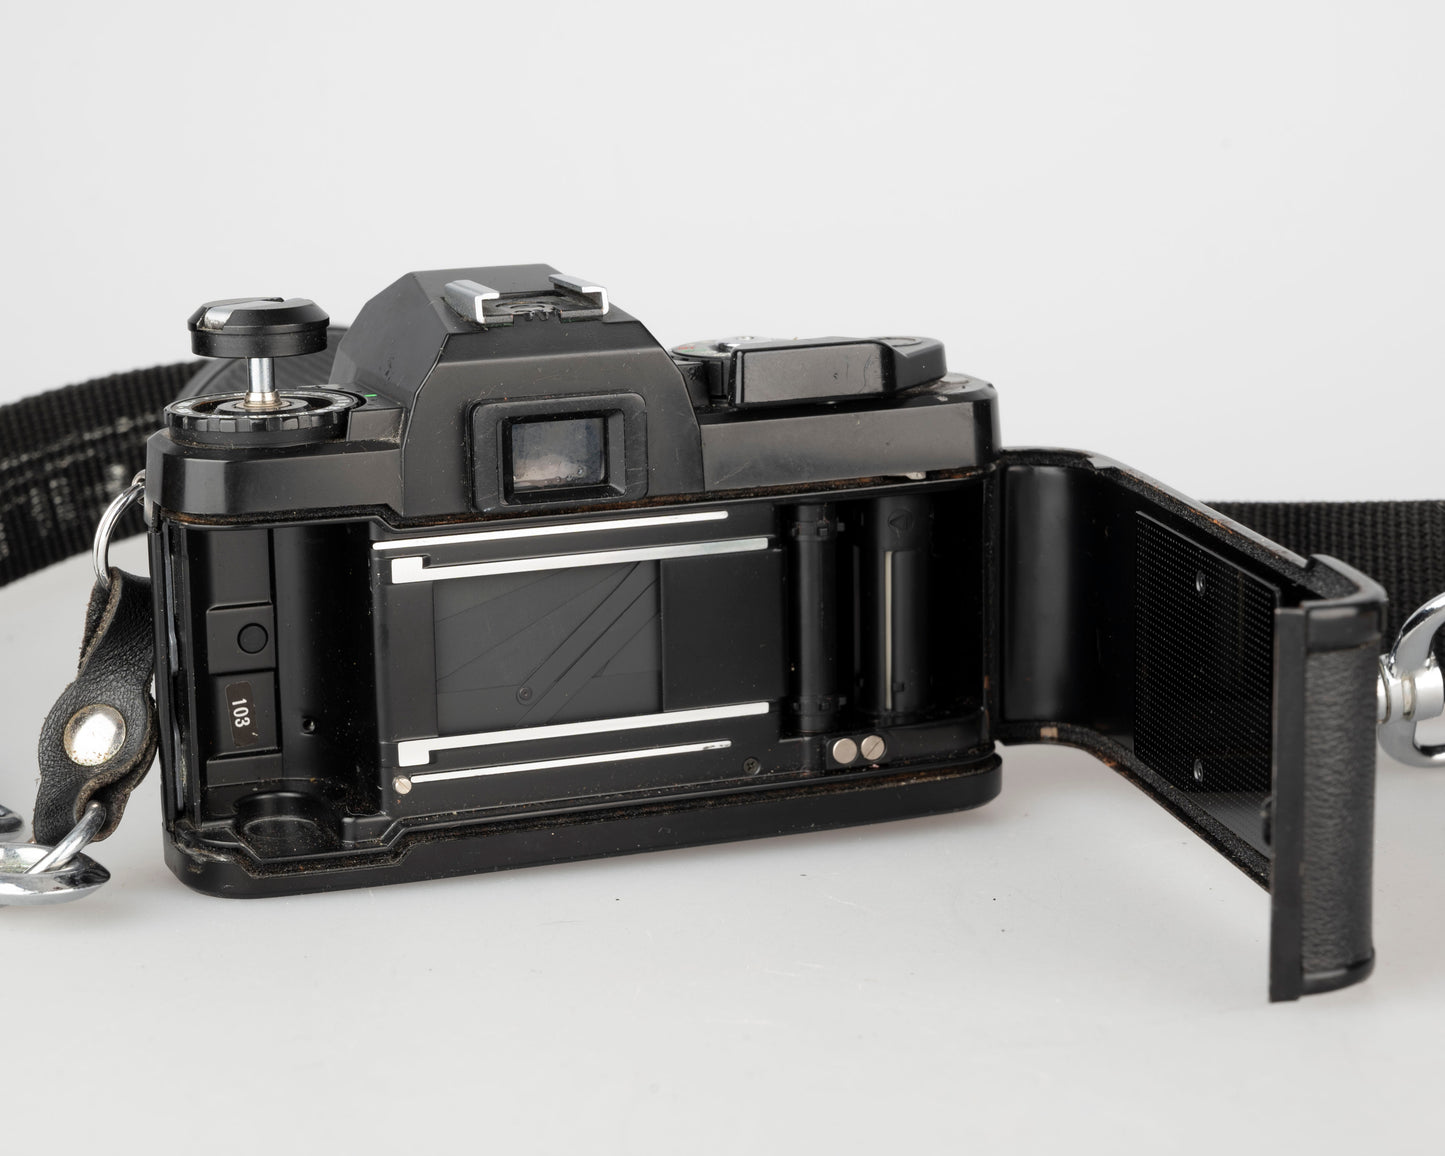 Chinon CG-5 35mm film SLR camera w/ 28-85mm zoom (uses K-mount lenses)